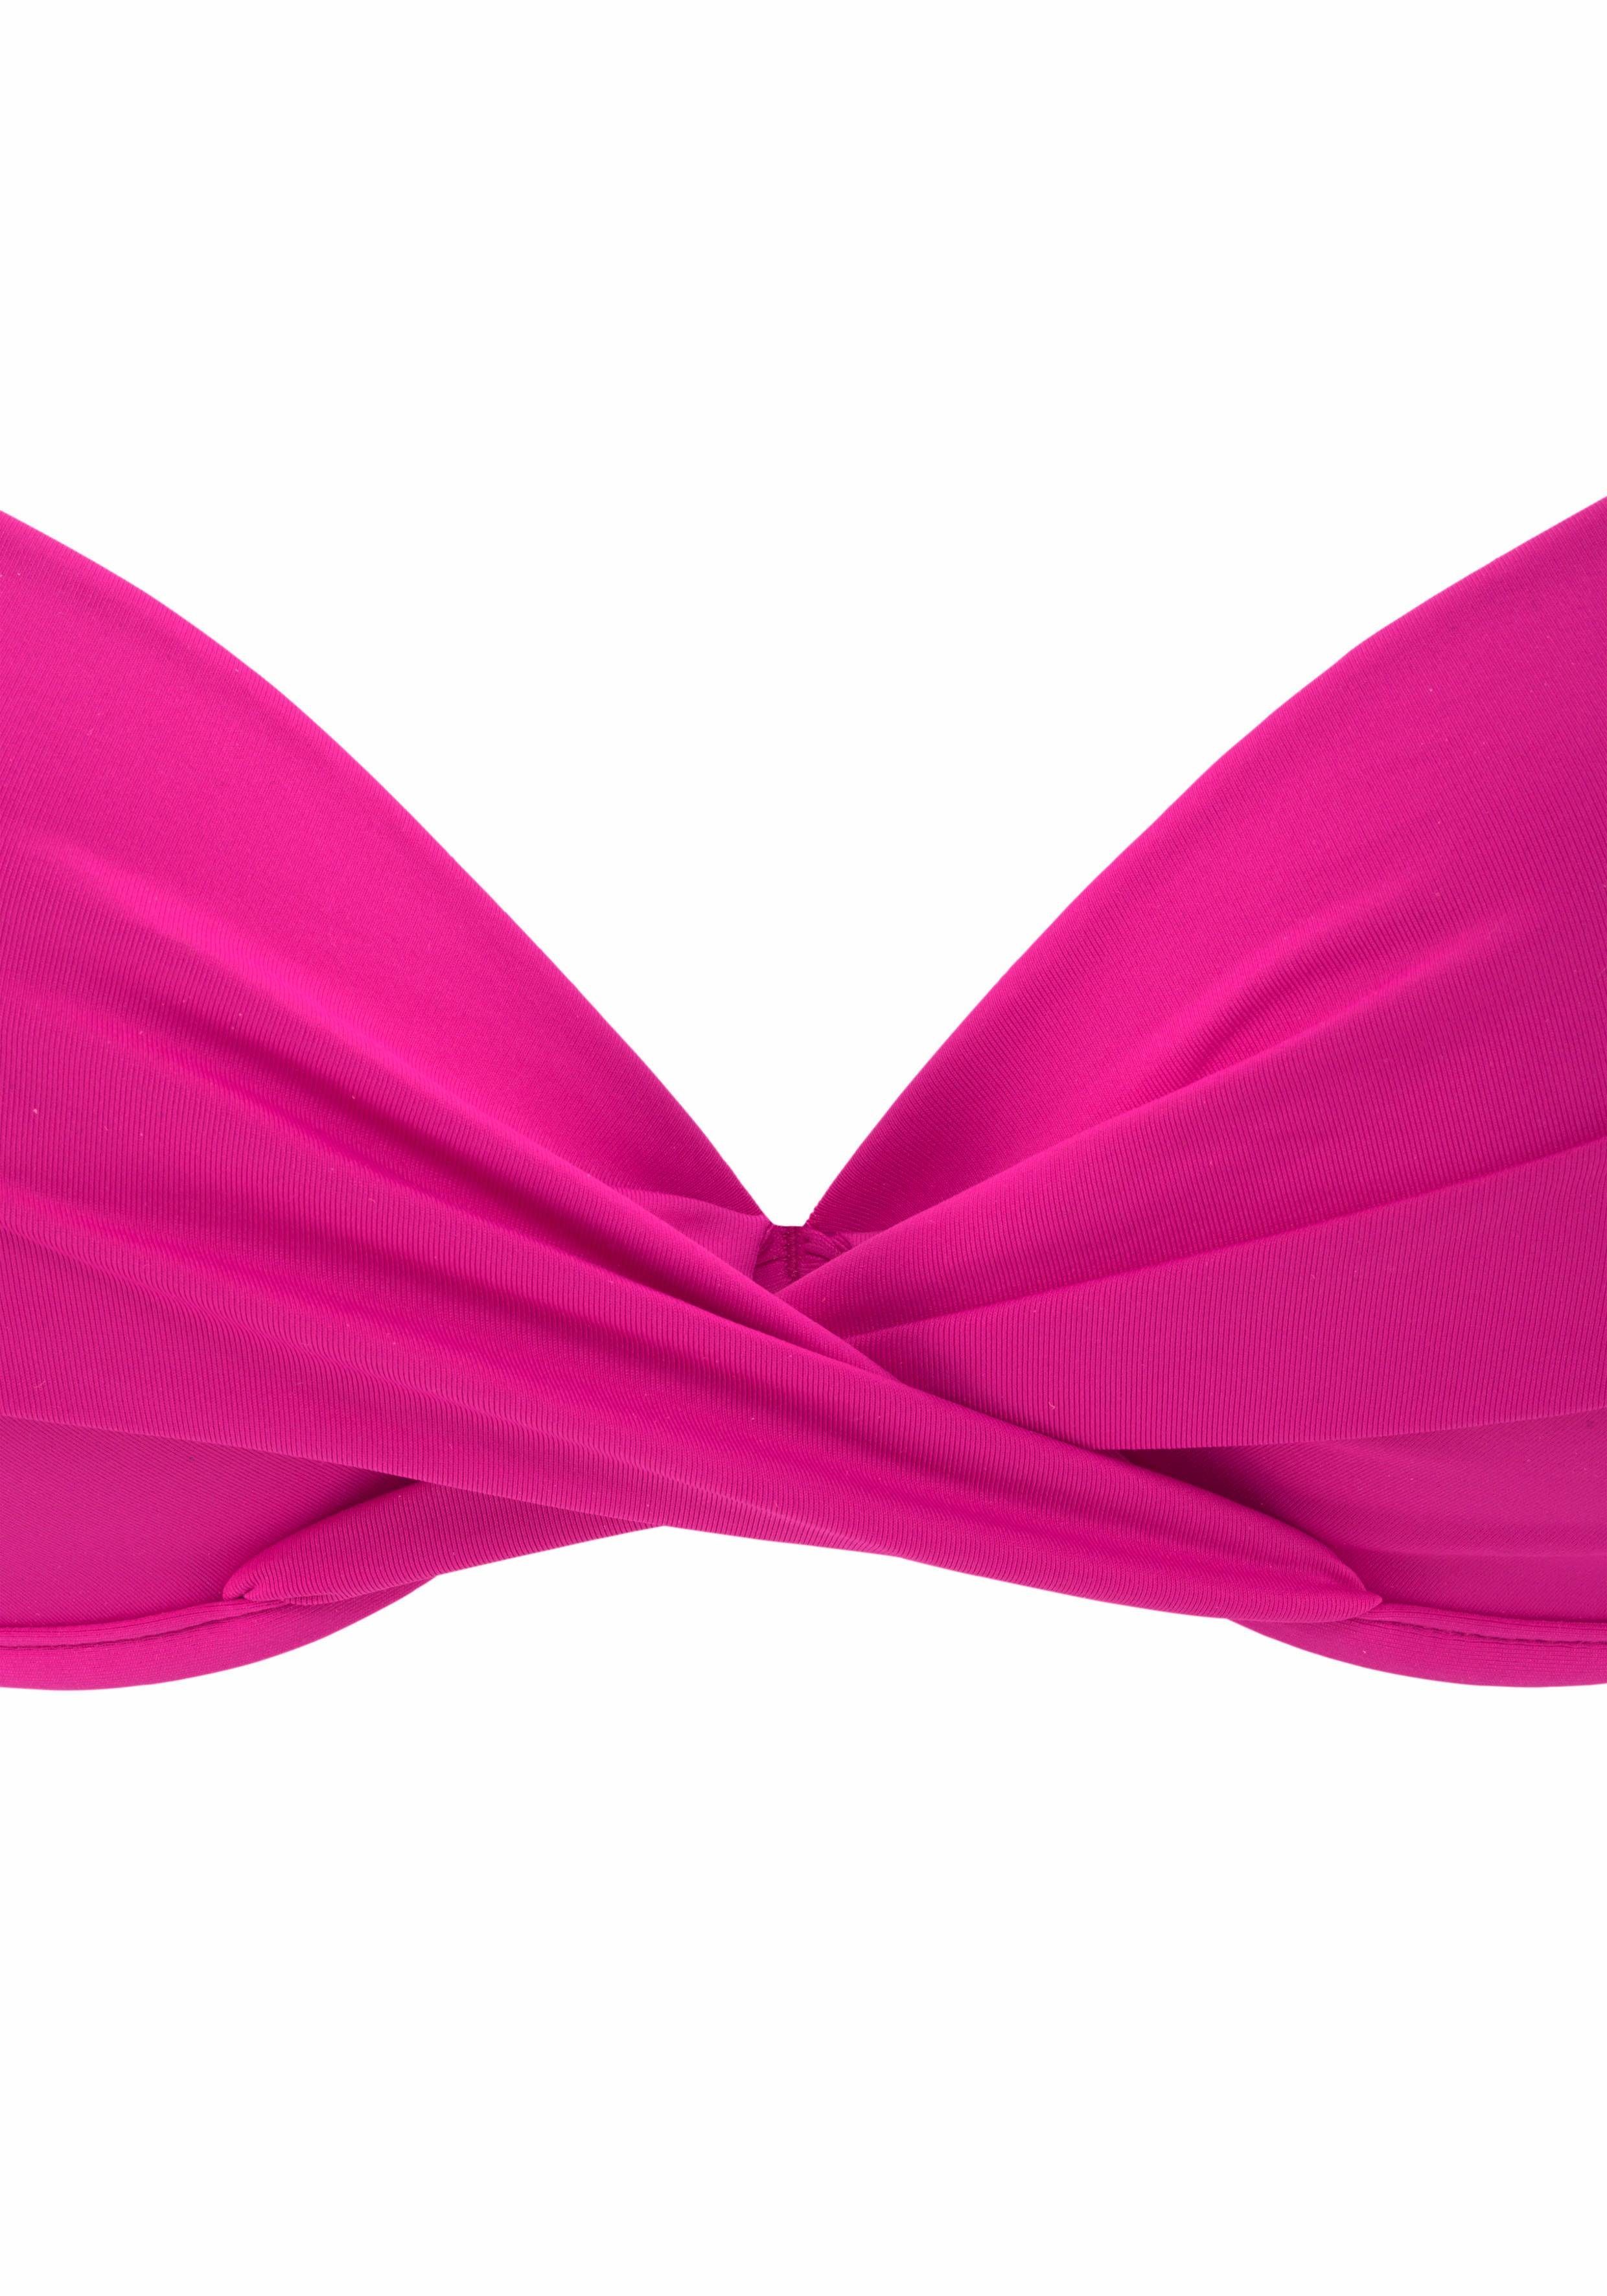 Wickeloptik in Spain, s.Oliver Push-Up-Bikini-Top pink